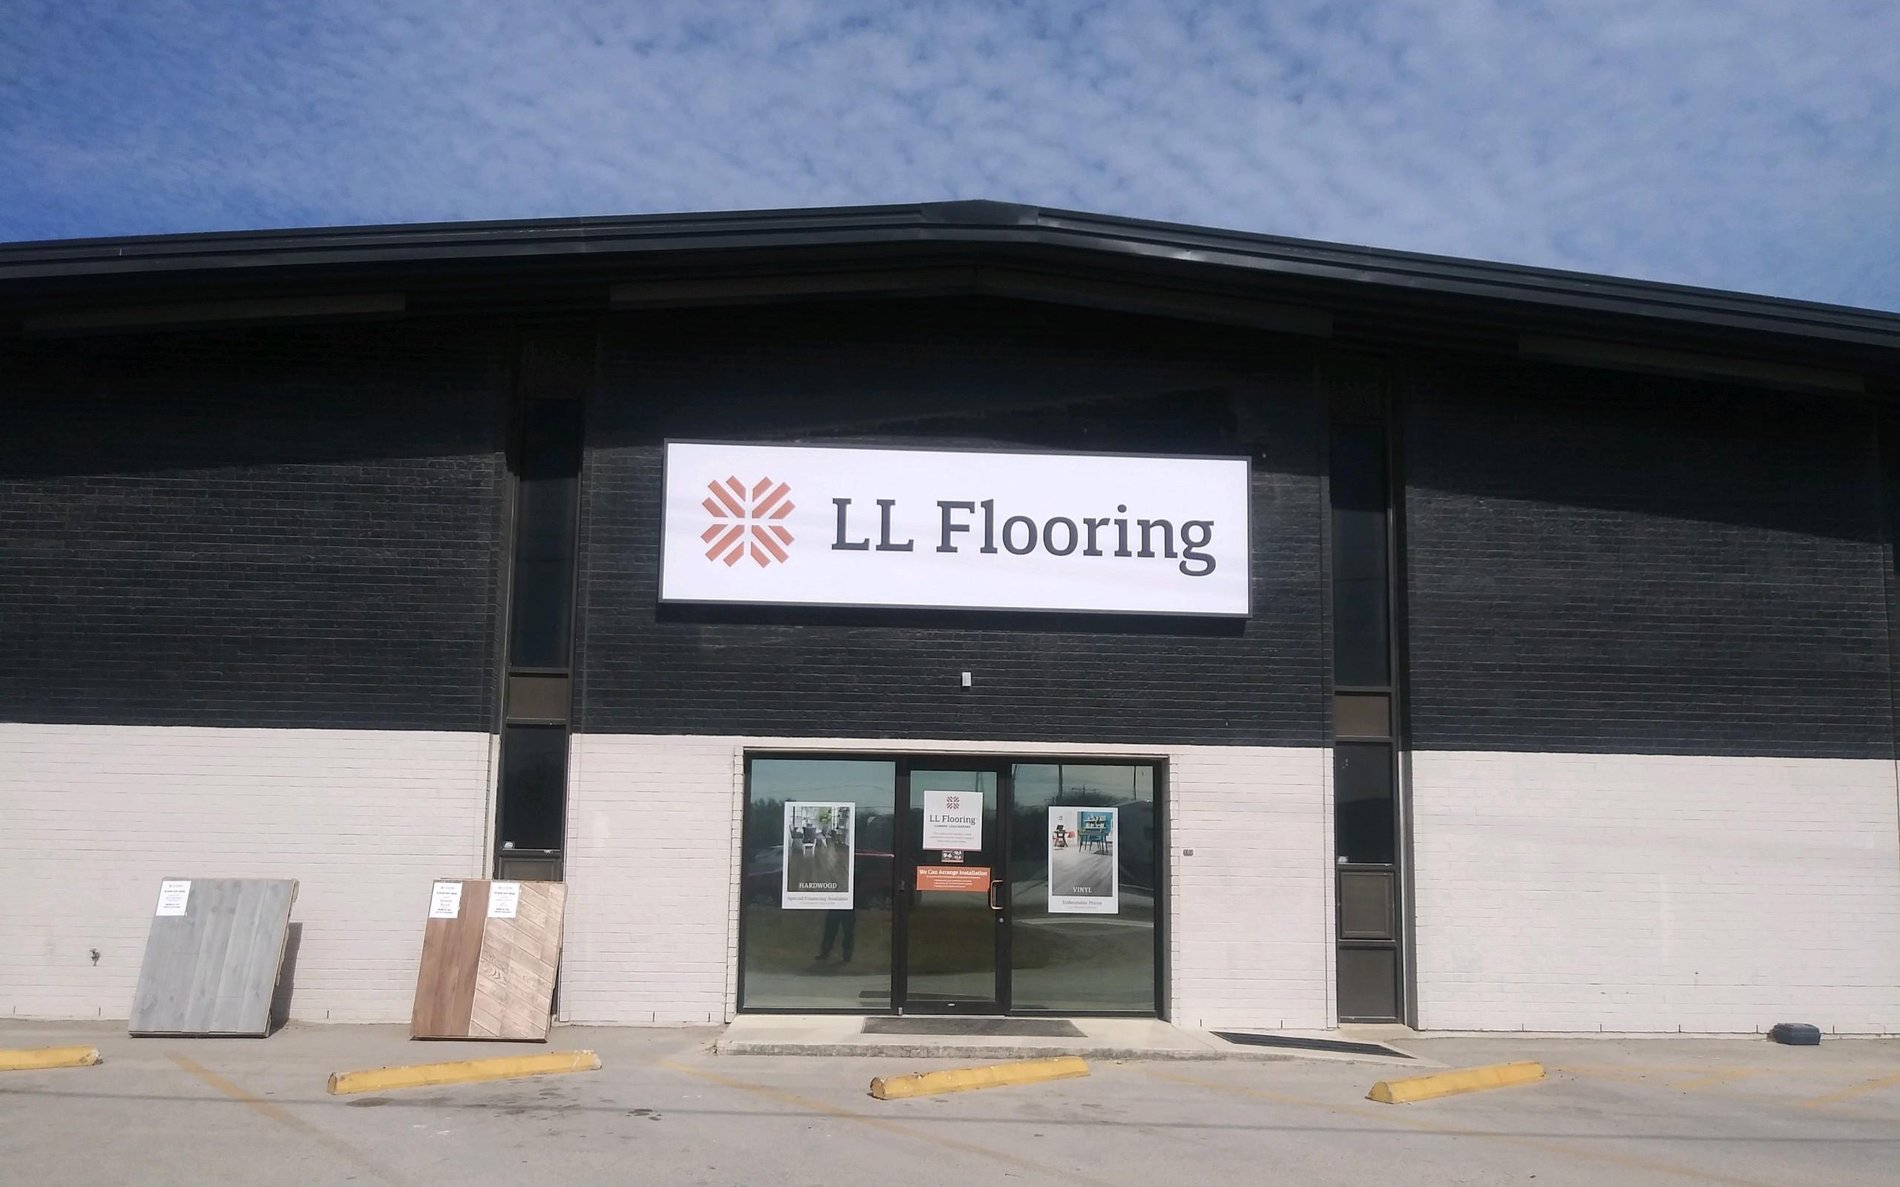 LL Flooring #1287 Selma | 15403 Interstate 35 North | Storefront